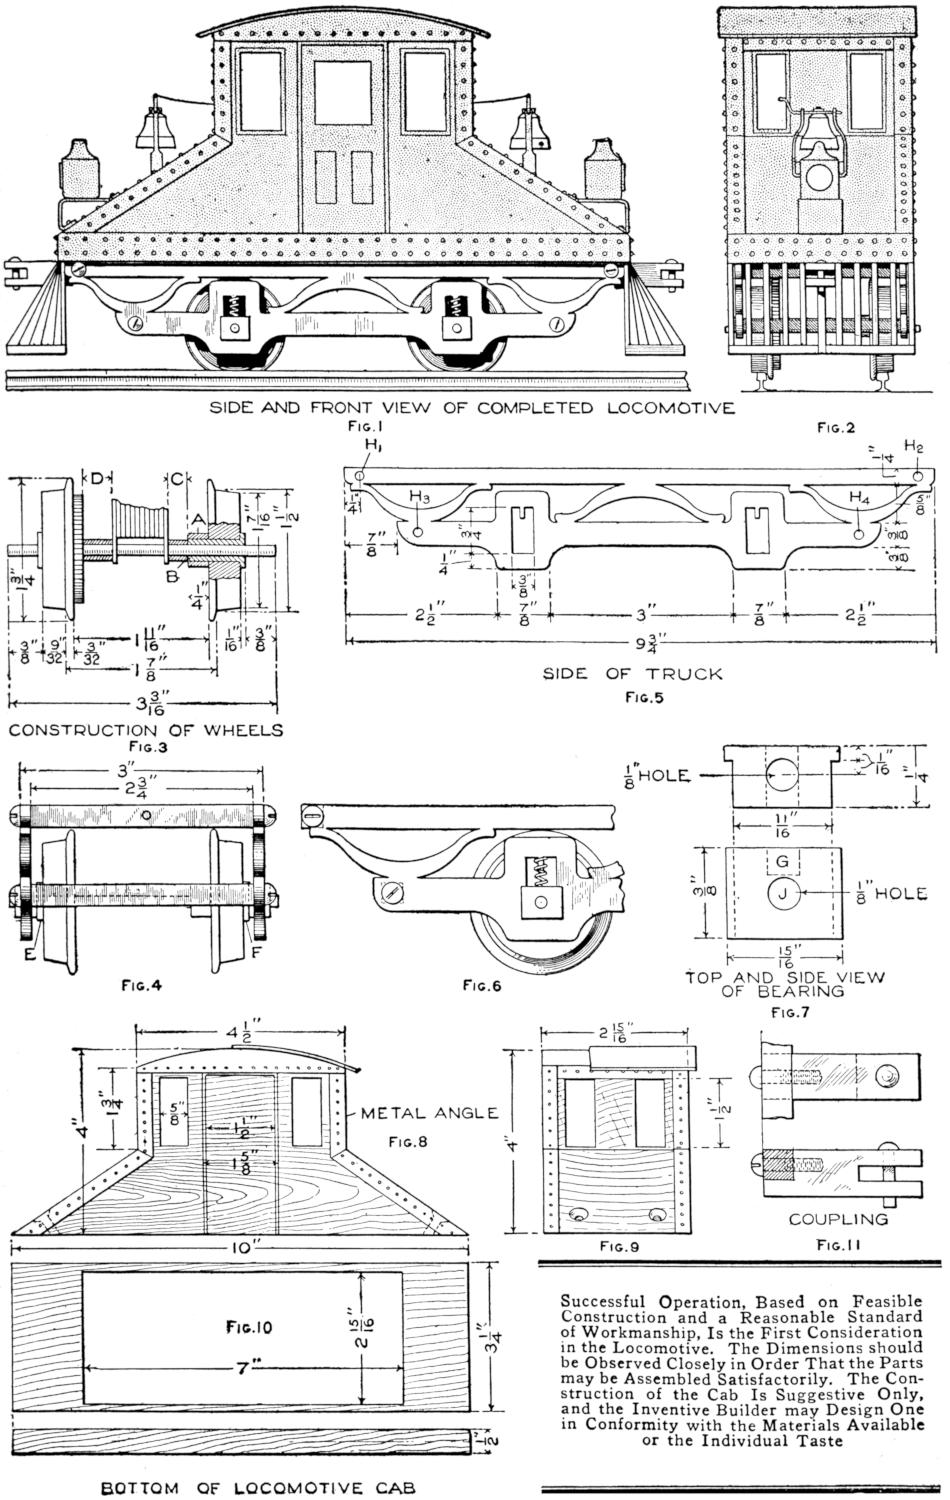 Details of locomotive